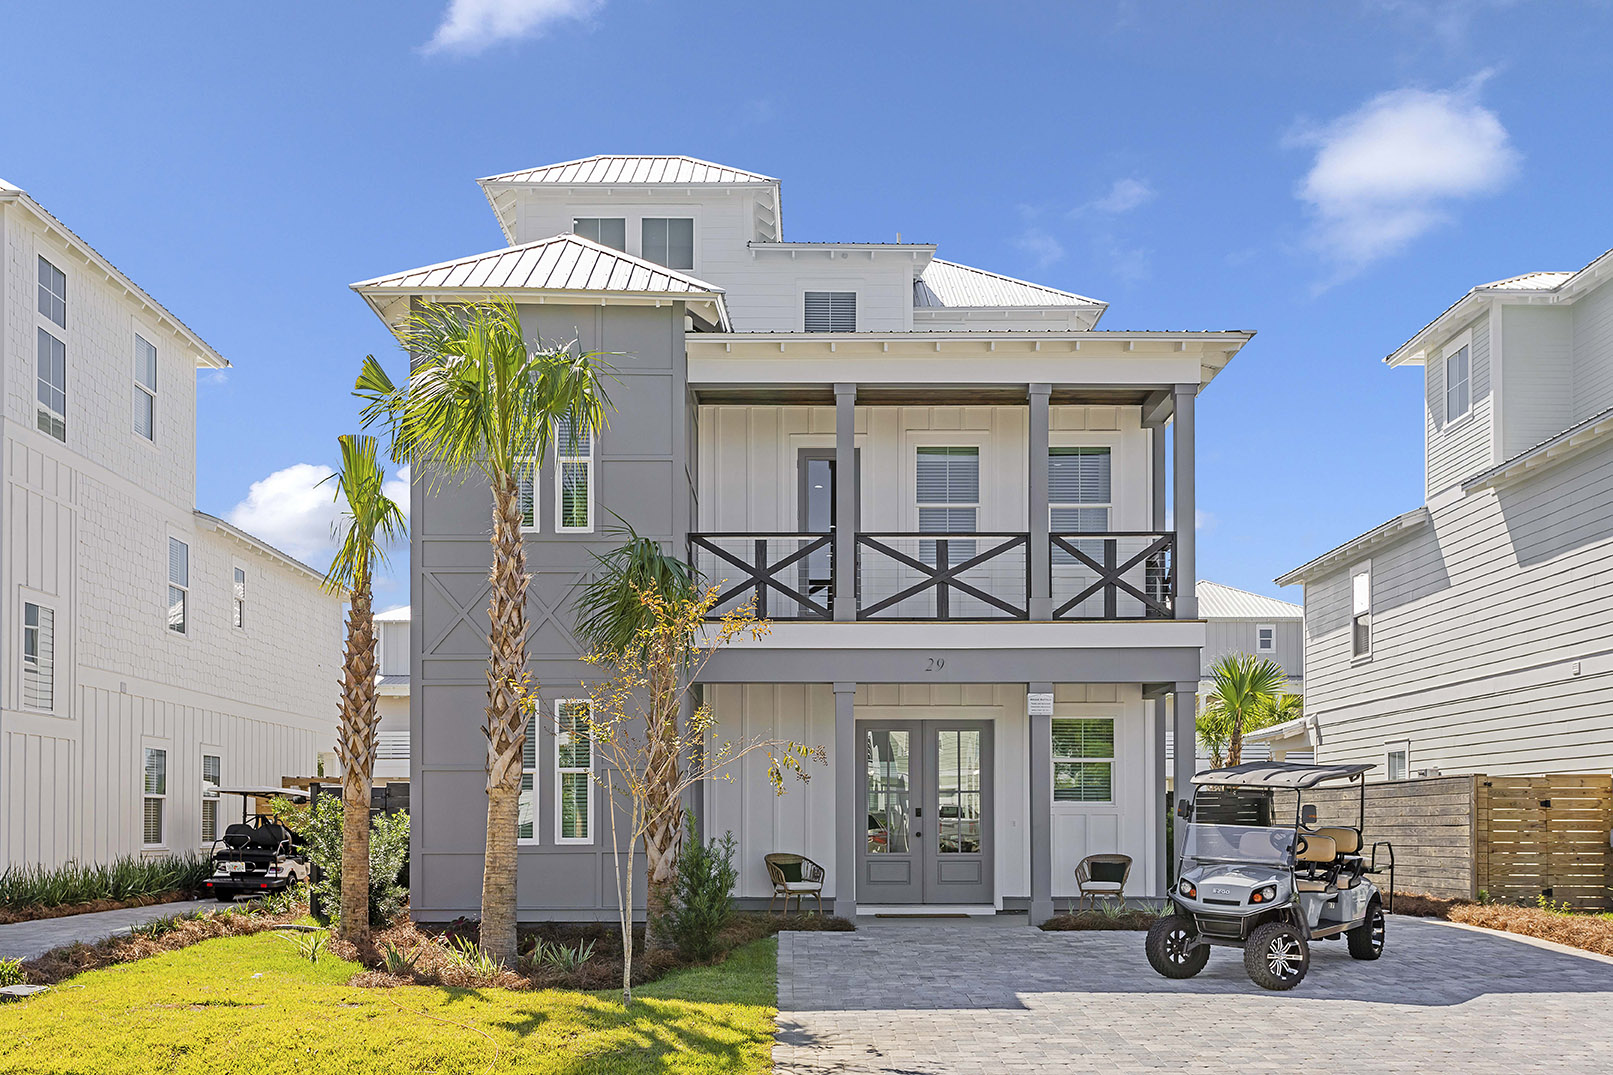 Bougie Buffalo - Travel Life Vacations - Destin Beach Houses - Florida Vacation Rental House